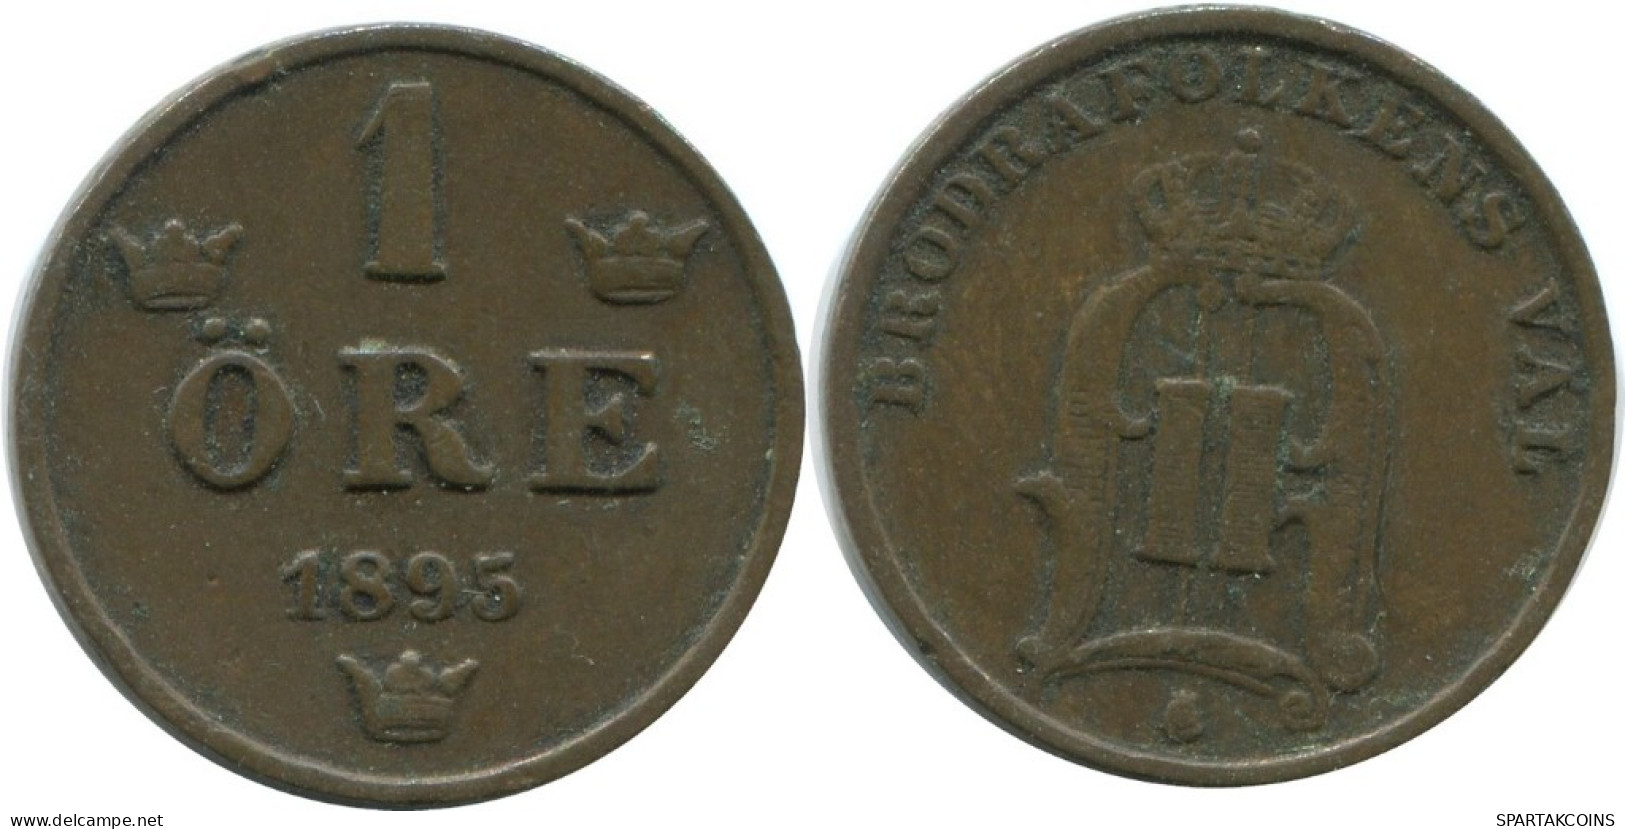 1 ORE 1895 SWEDEN Coin #AD366.2.U.A - Sweden